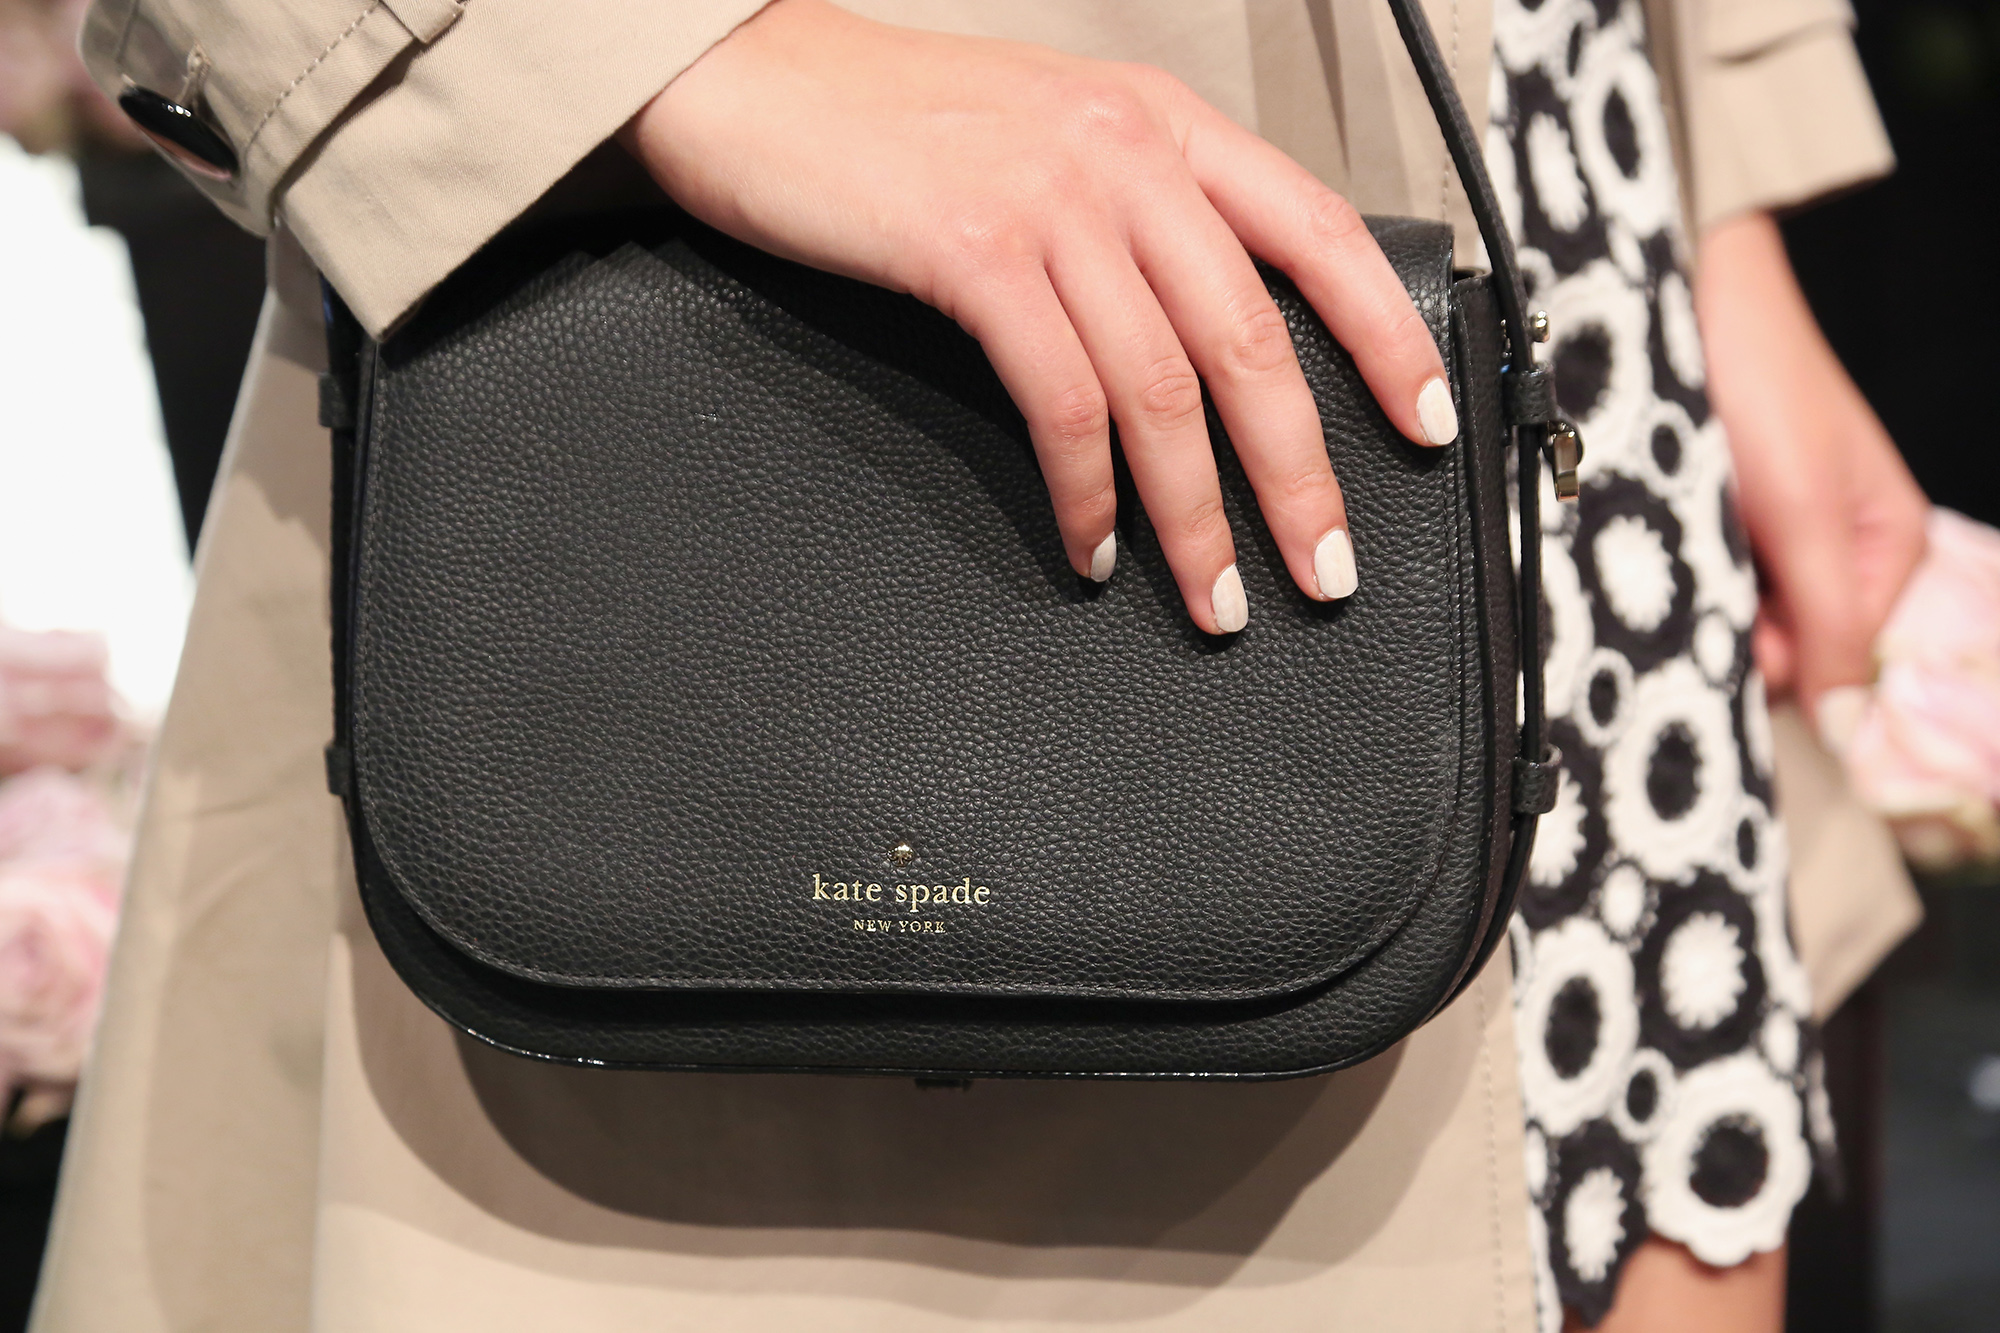 Best Kate Spade New York Bags on Sale 2019